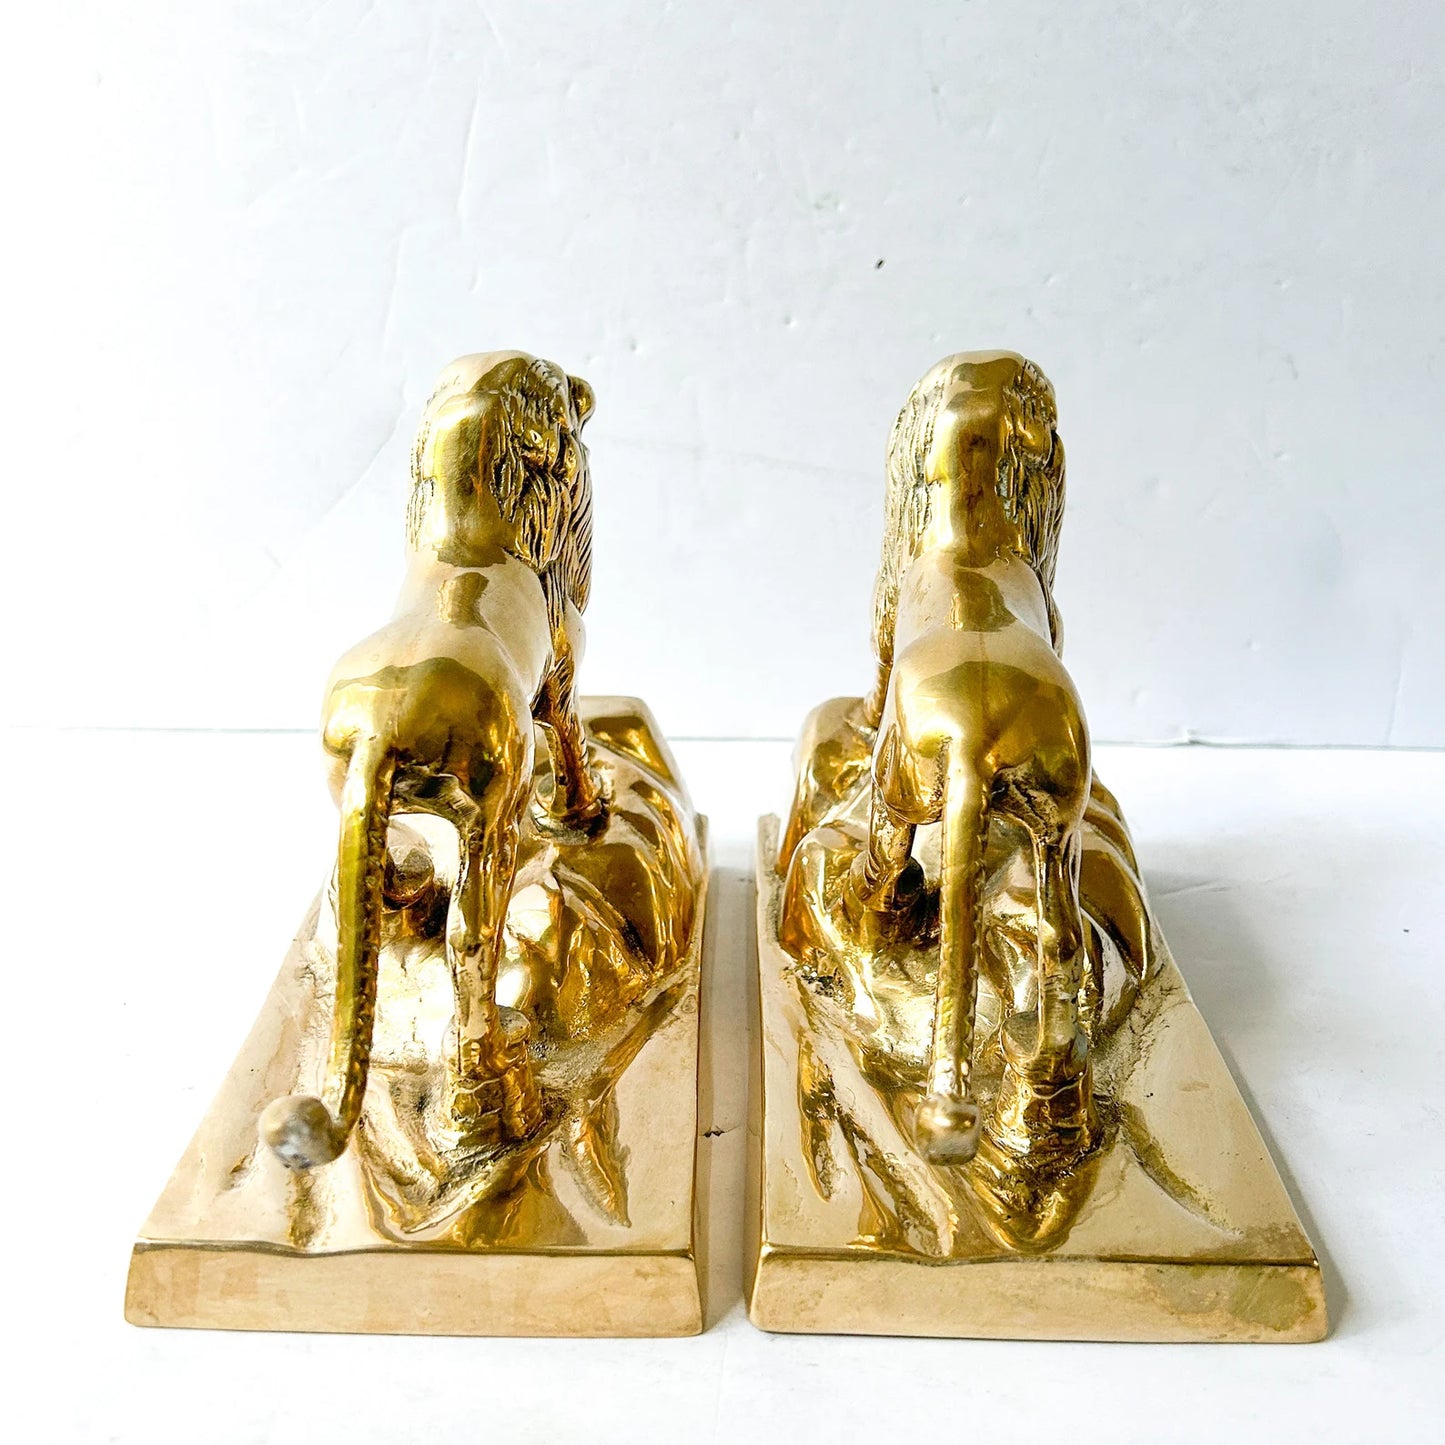 Vintage brass lion bookends